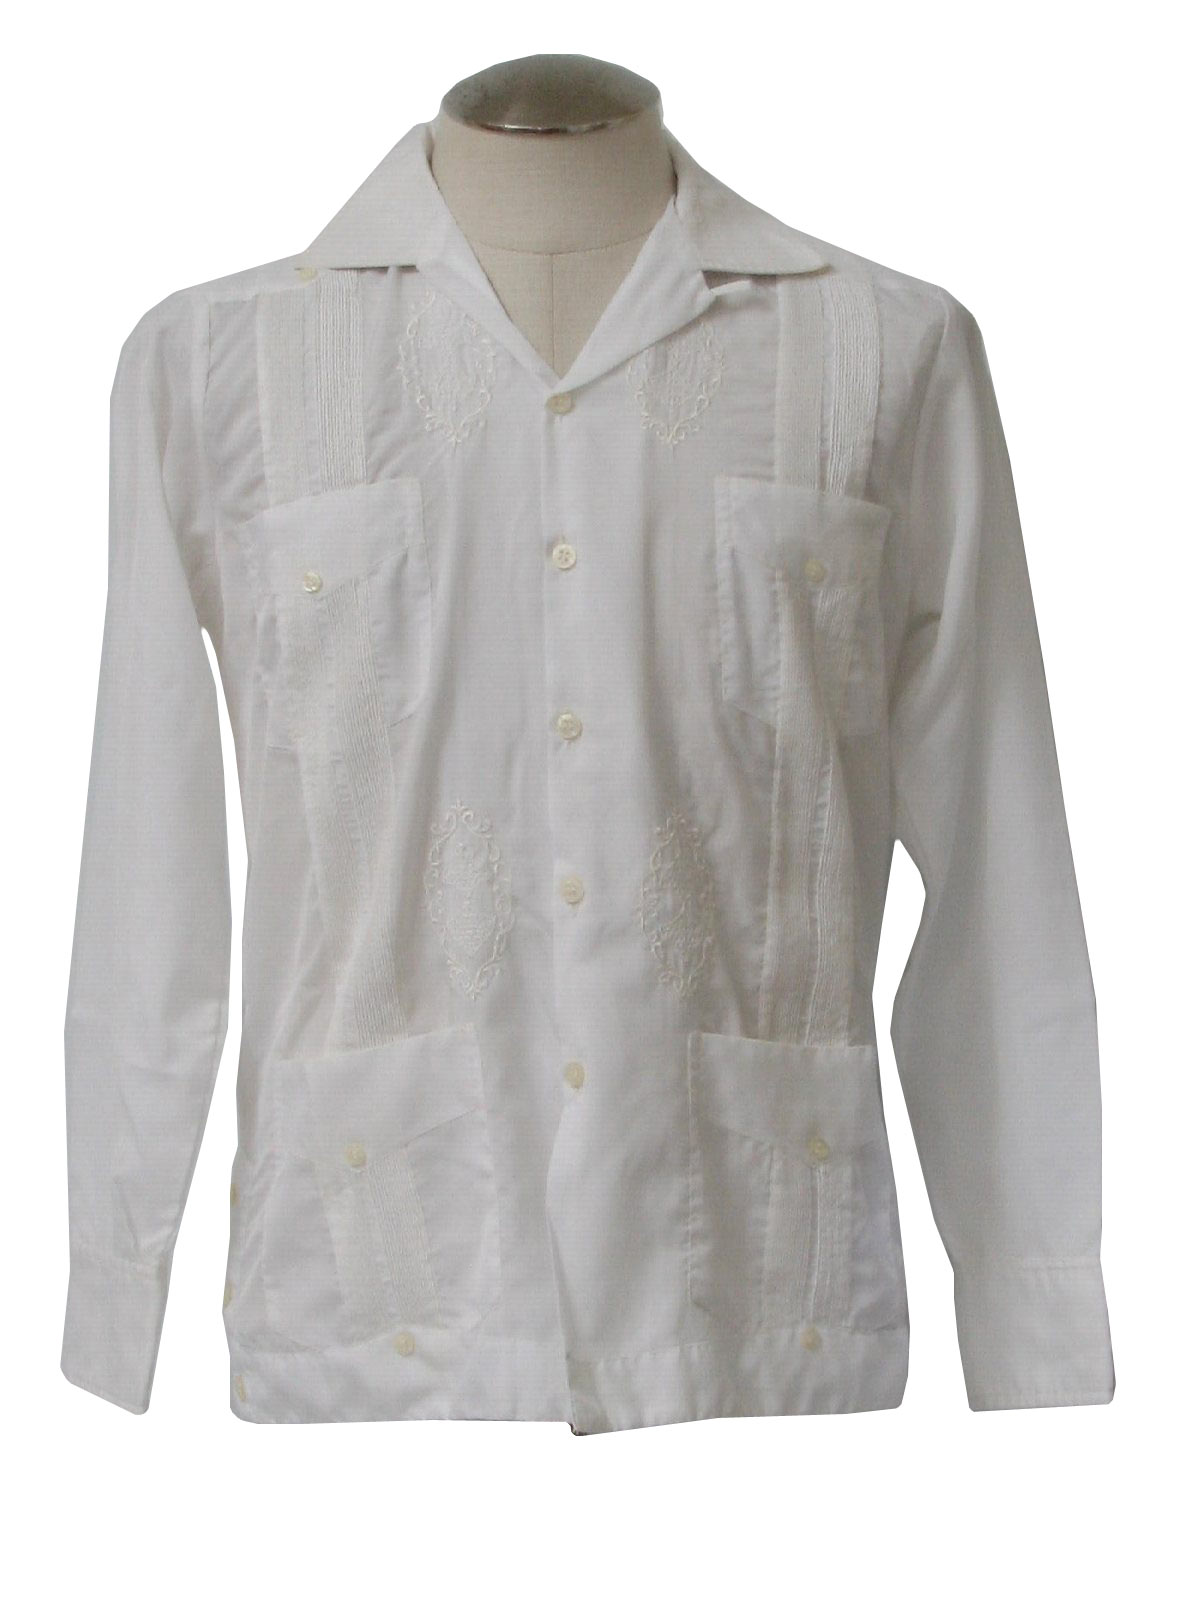 Retro 1970's Guayabera Shirt (Guay teca) : 70s -Guay teca- Mens white ...